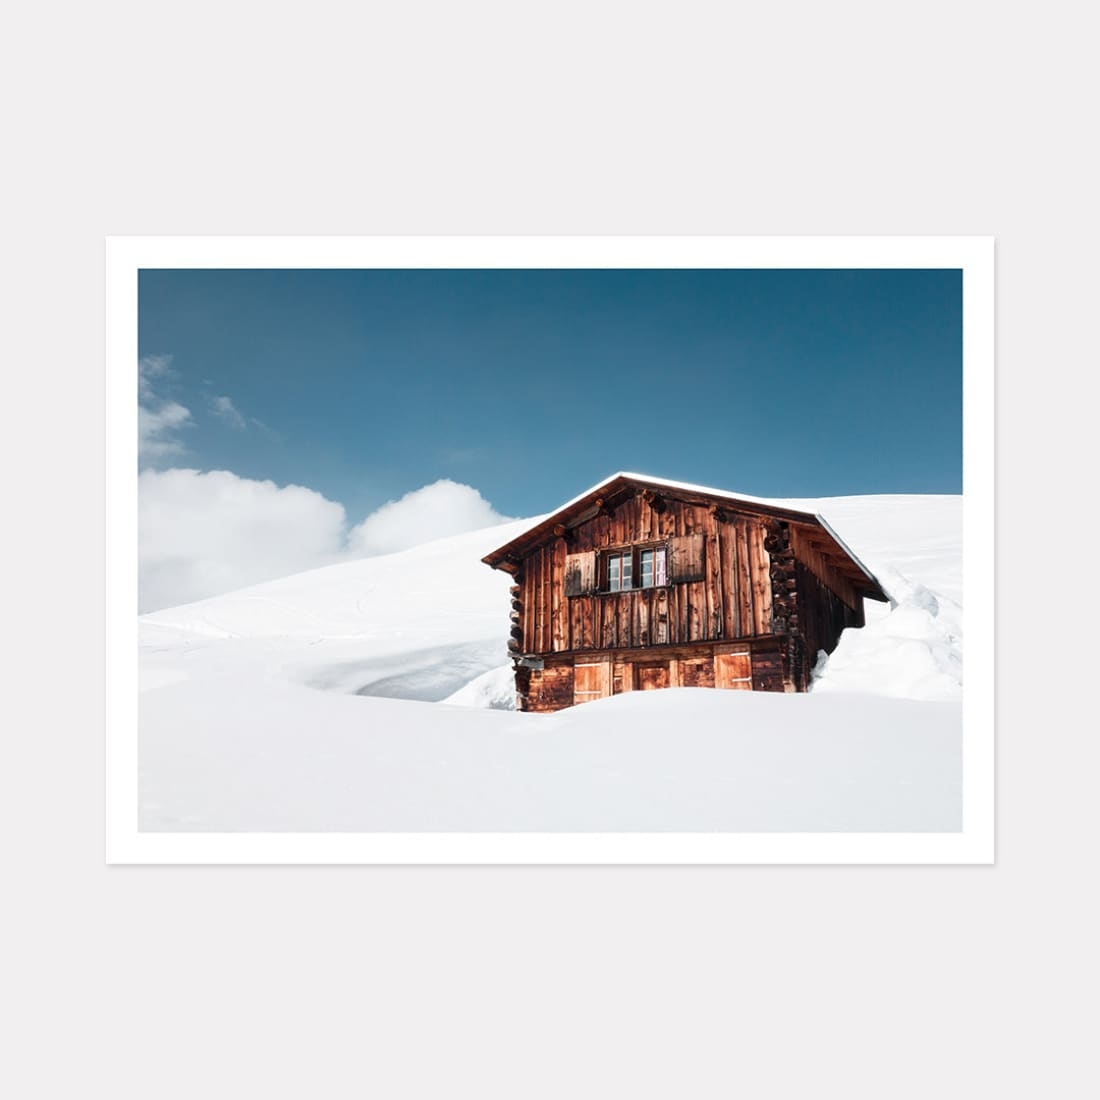 The Hut Ski Art Print, A2 (59.4cm x 42cm) unframed print – Powderhound